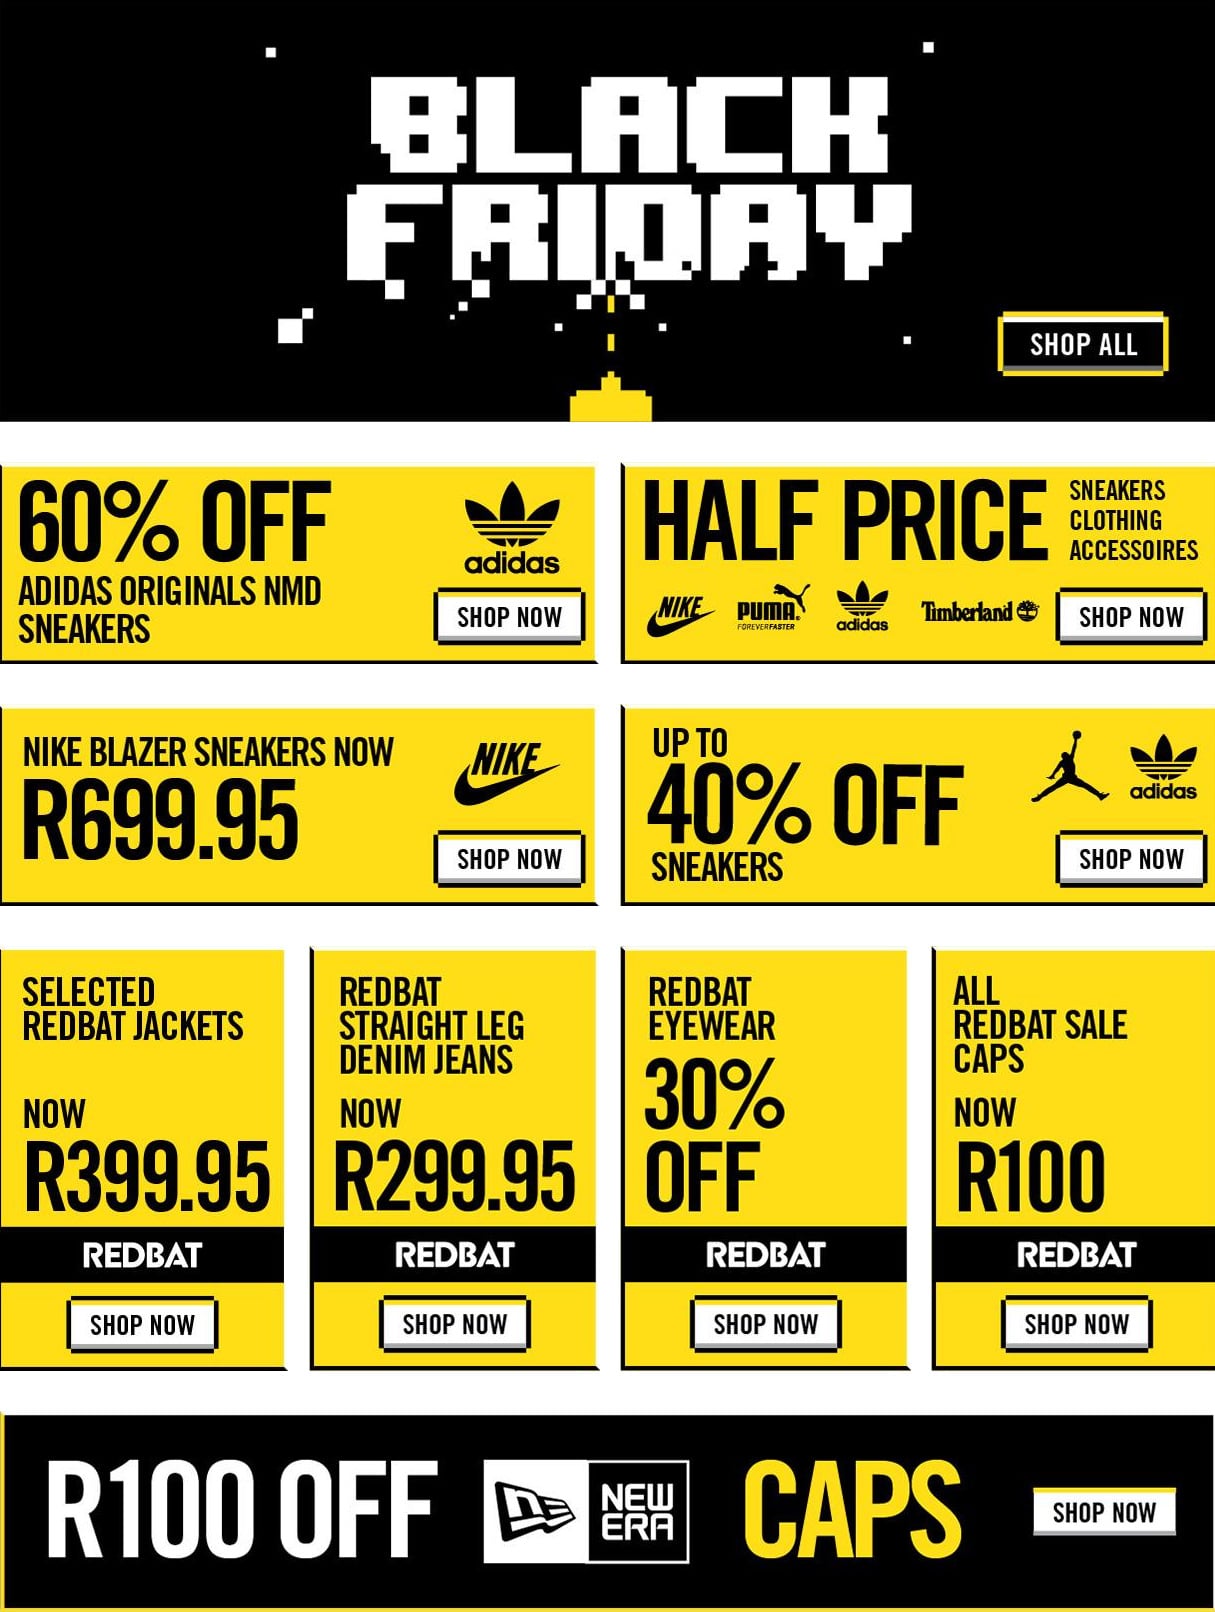 Sportscene Black Friday 2019 Sale & Deals - What Stores Can You Black Friday Shop Online